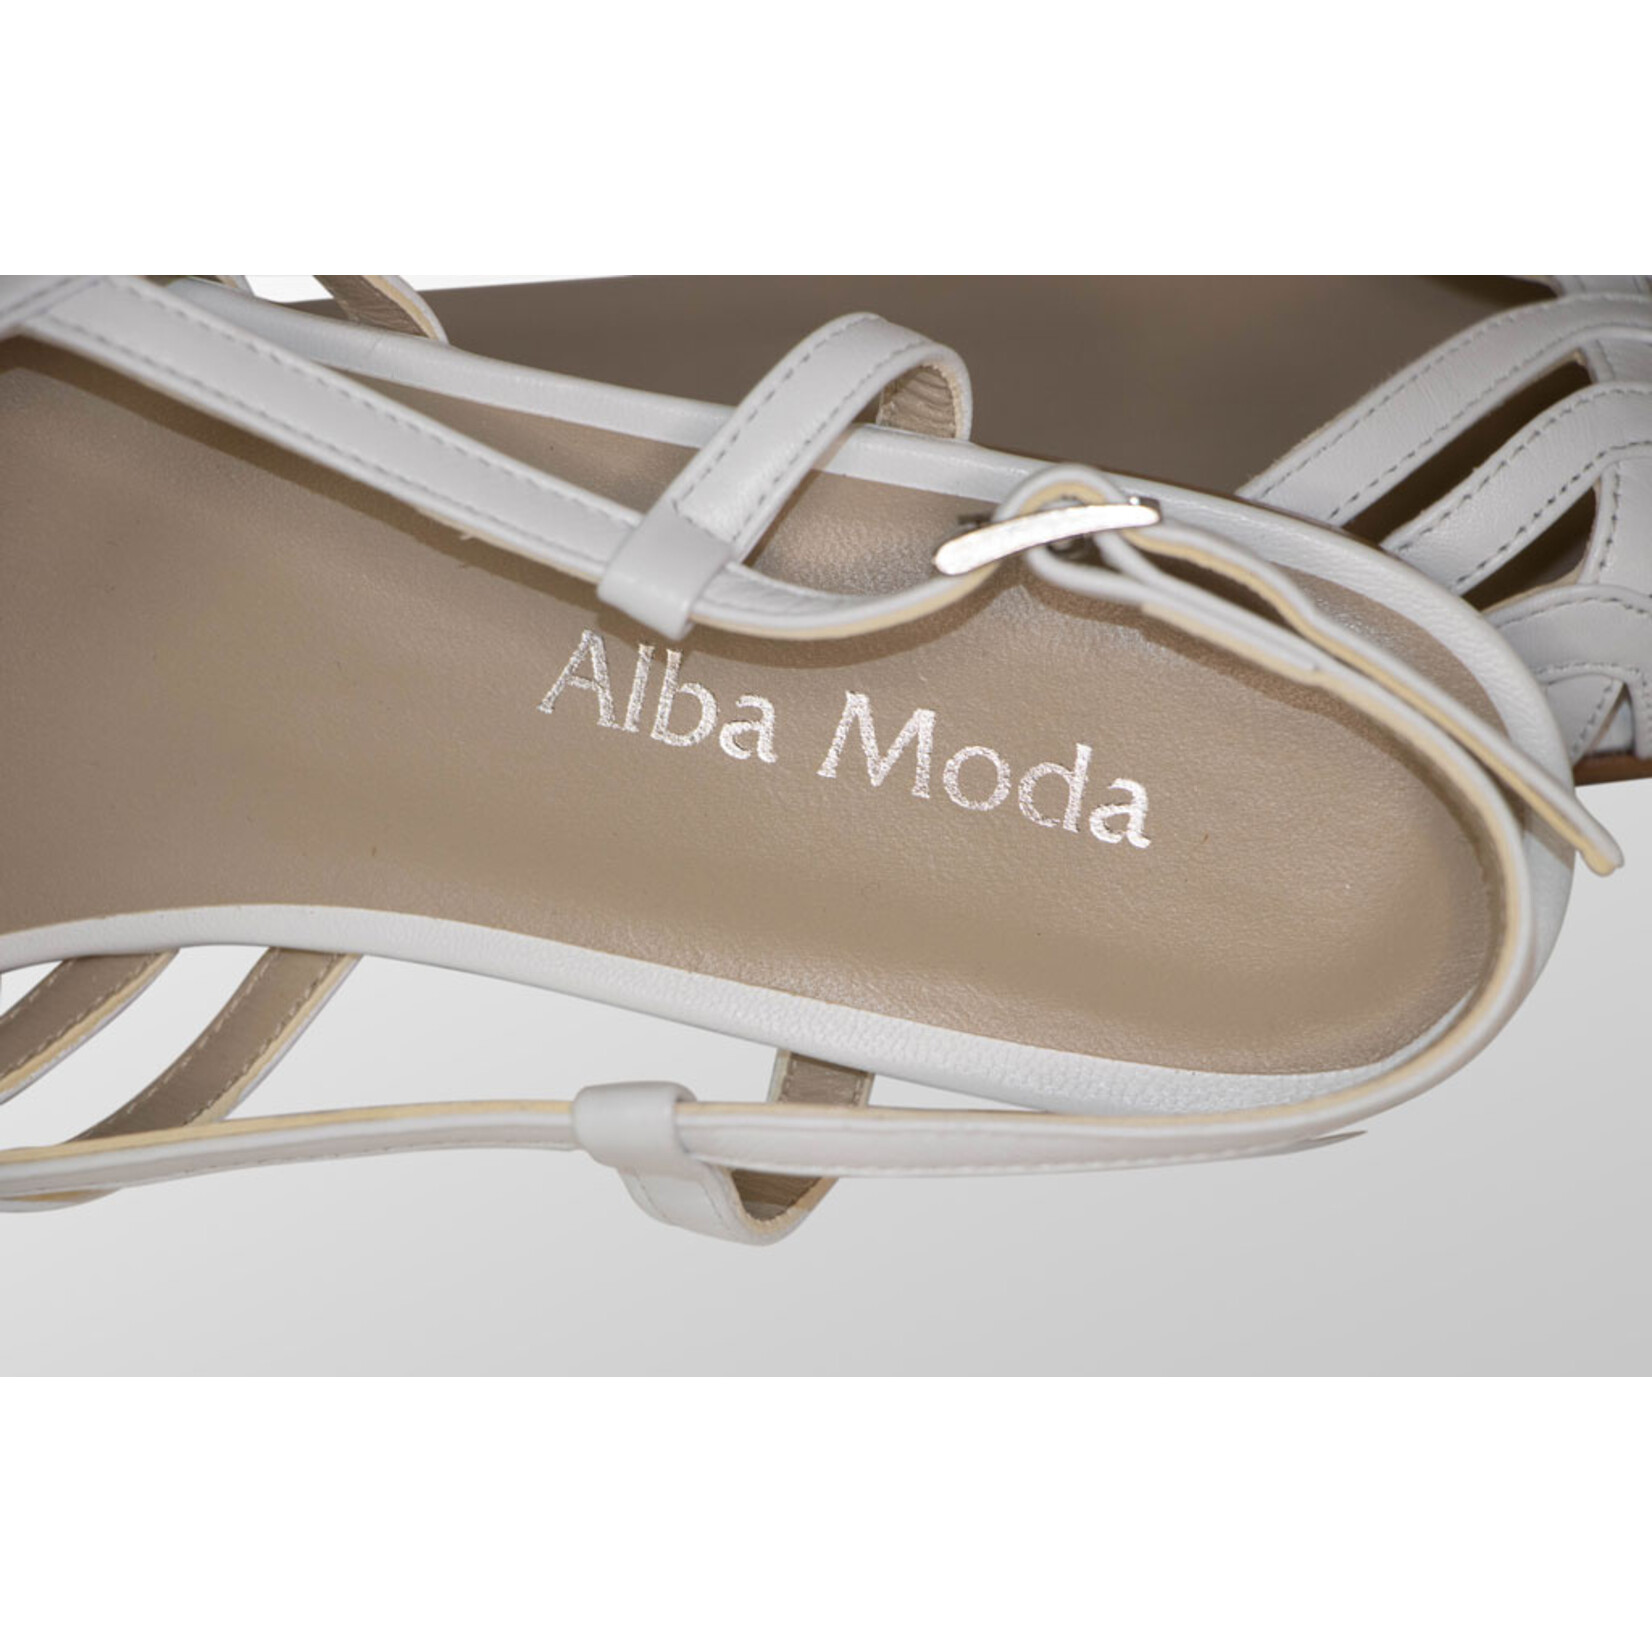 Alba Moda Sandale Damen Leder - Weiß - B-Ware - Retoure